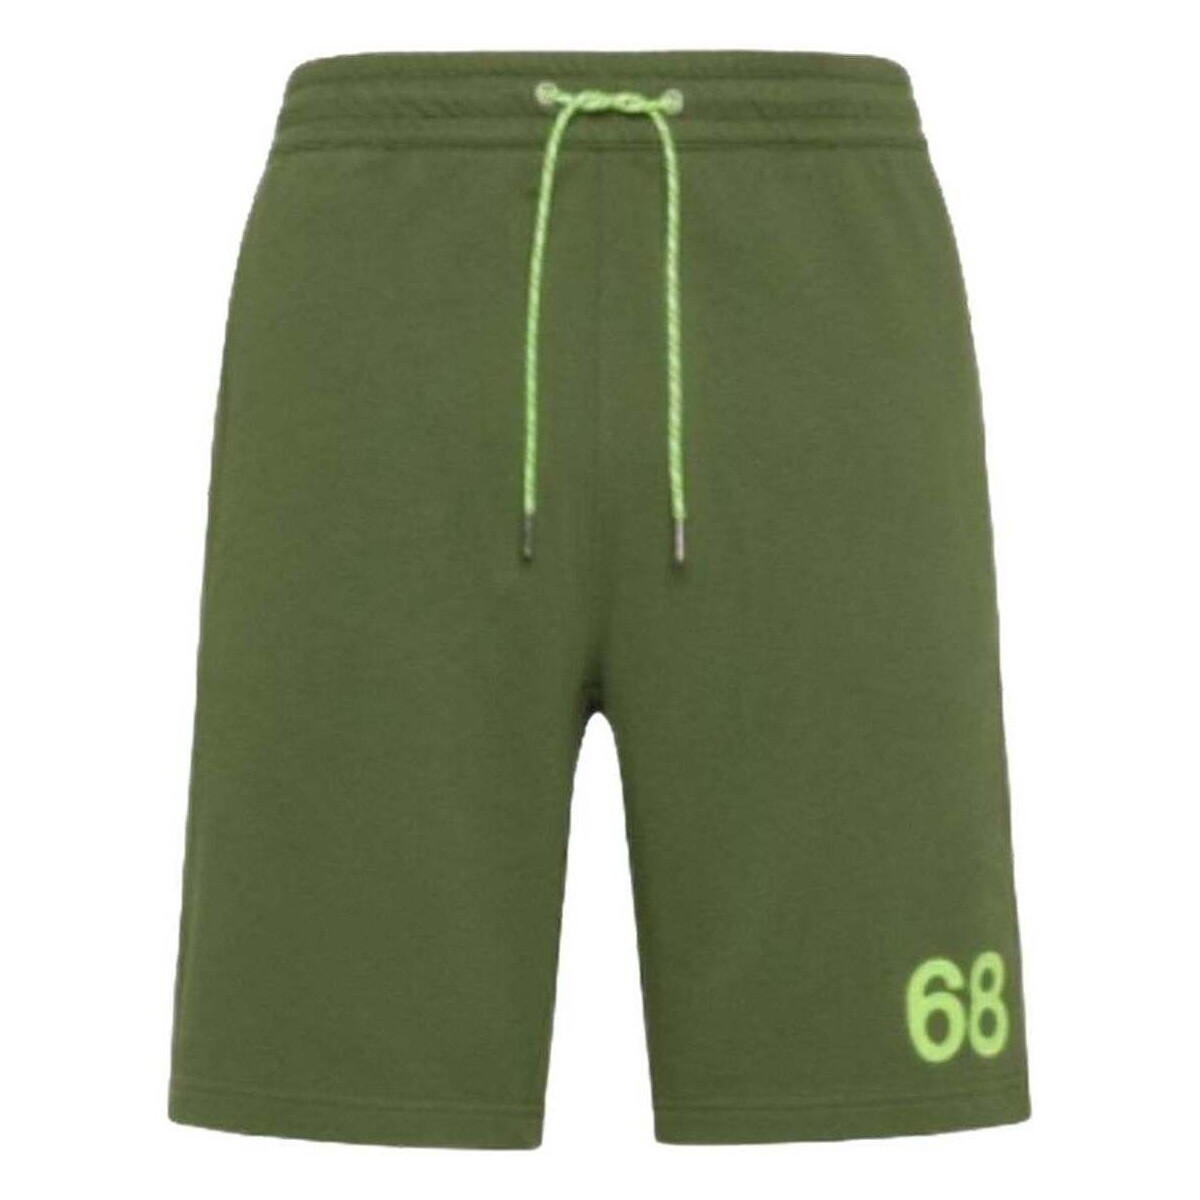 Vêtements Homme Shorts / Bermudas Sun68  Vert